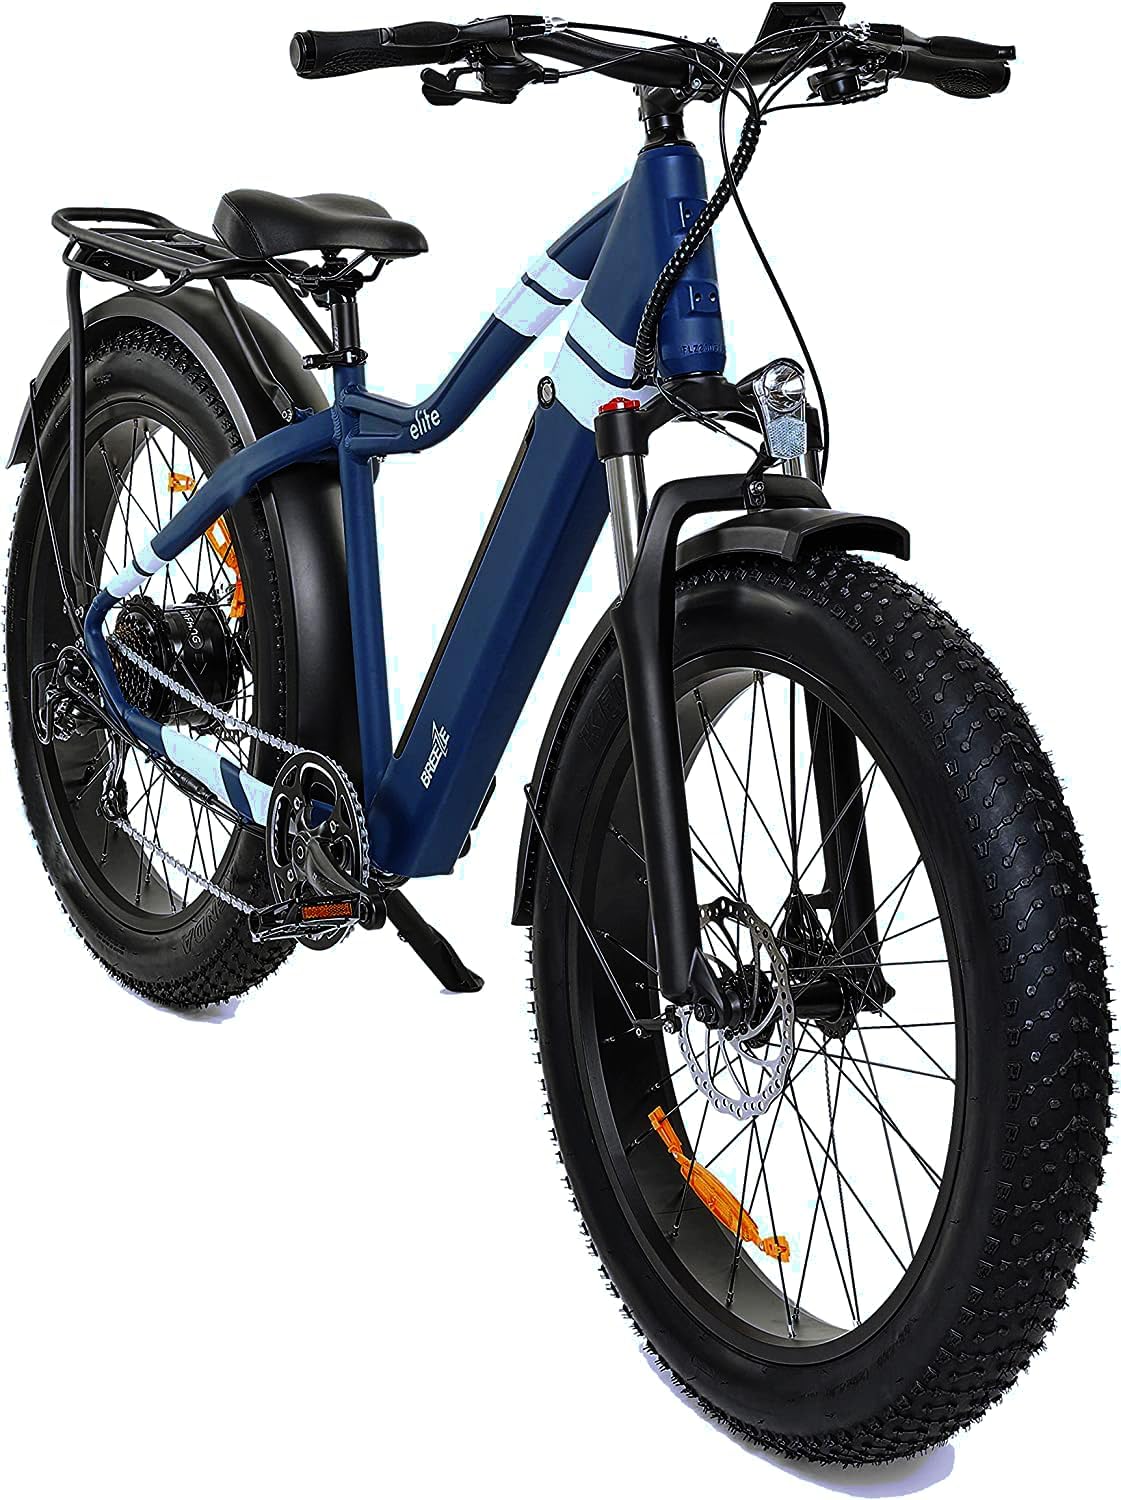 MotoTec 105cc 3.5HP Gas Powered Mini Bike – Safecastle